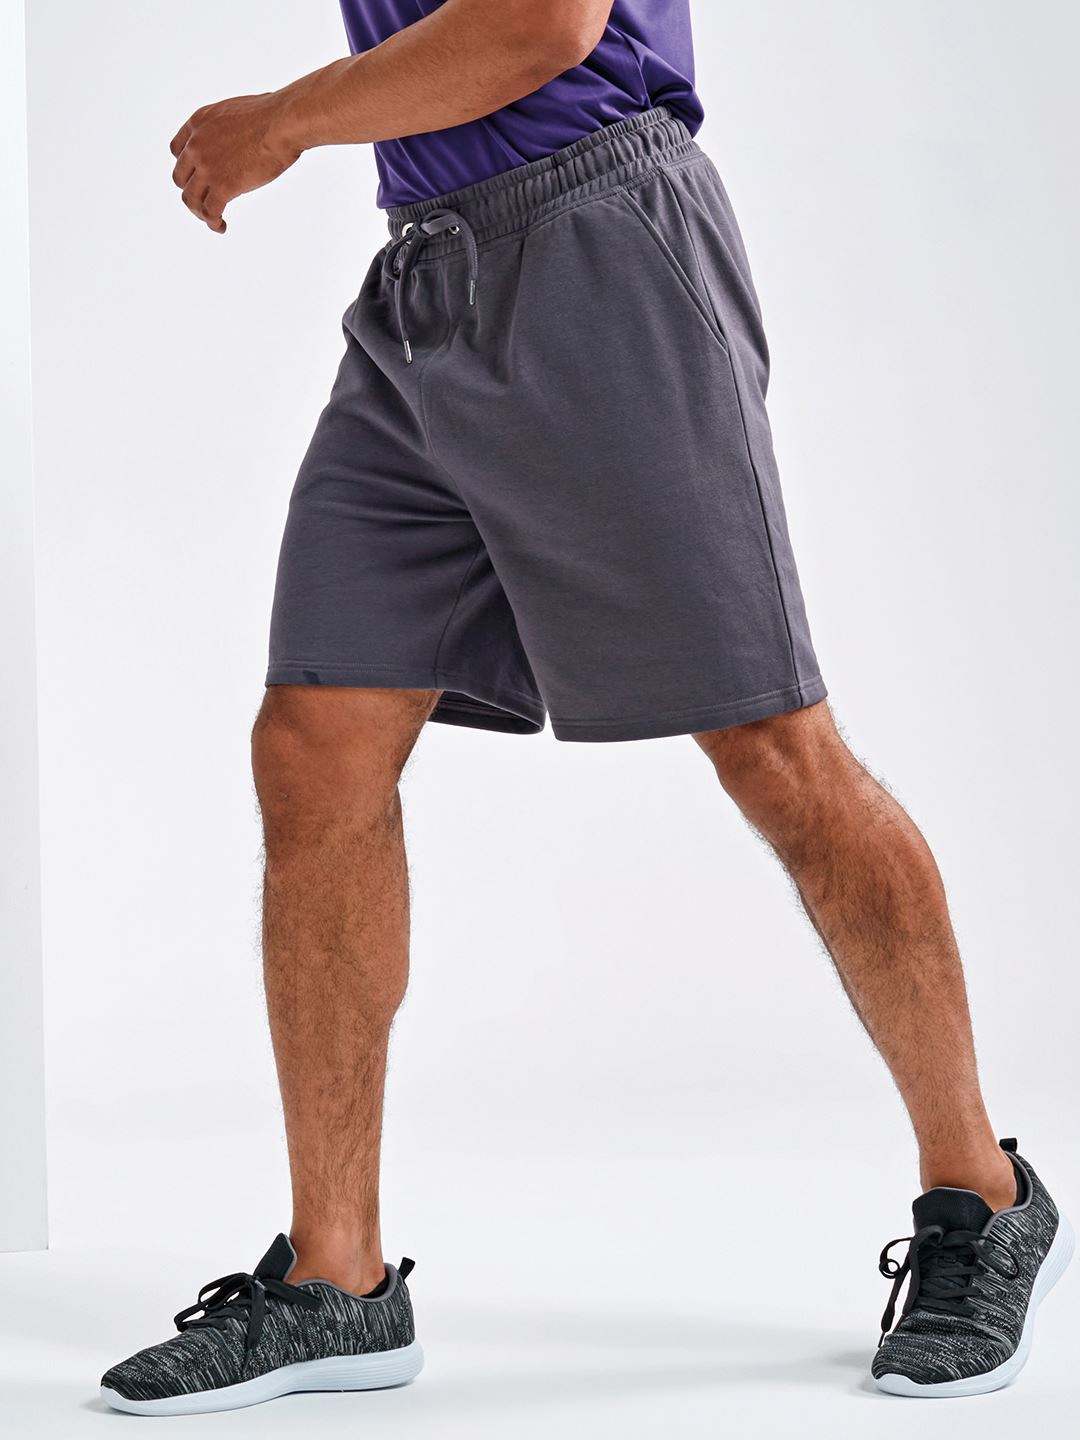 TR058 Men's Tridri® Jogger Shorts Image 5